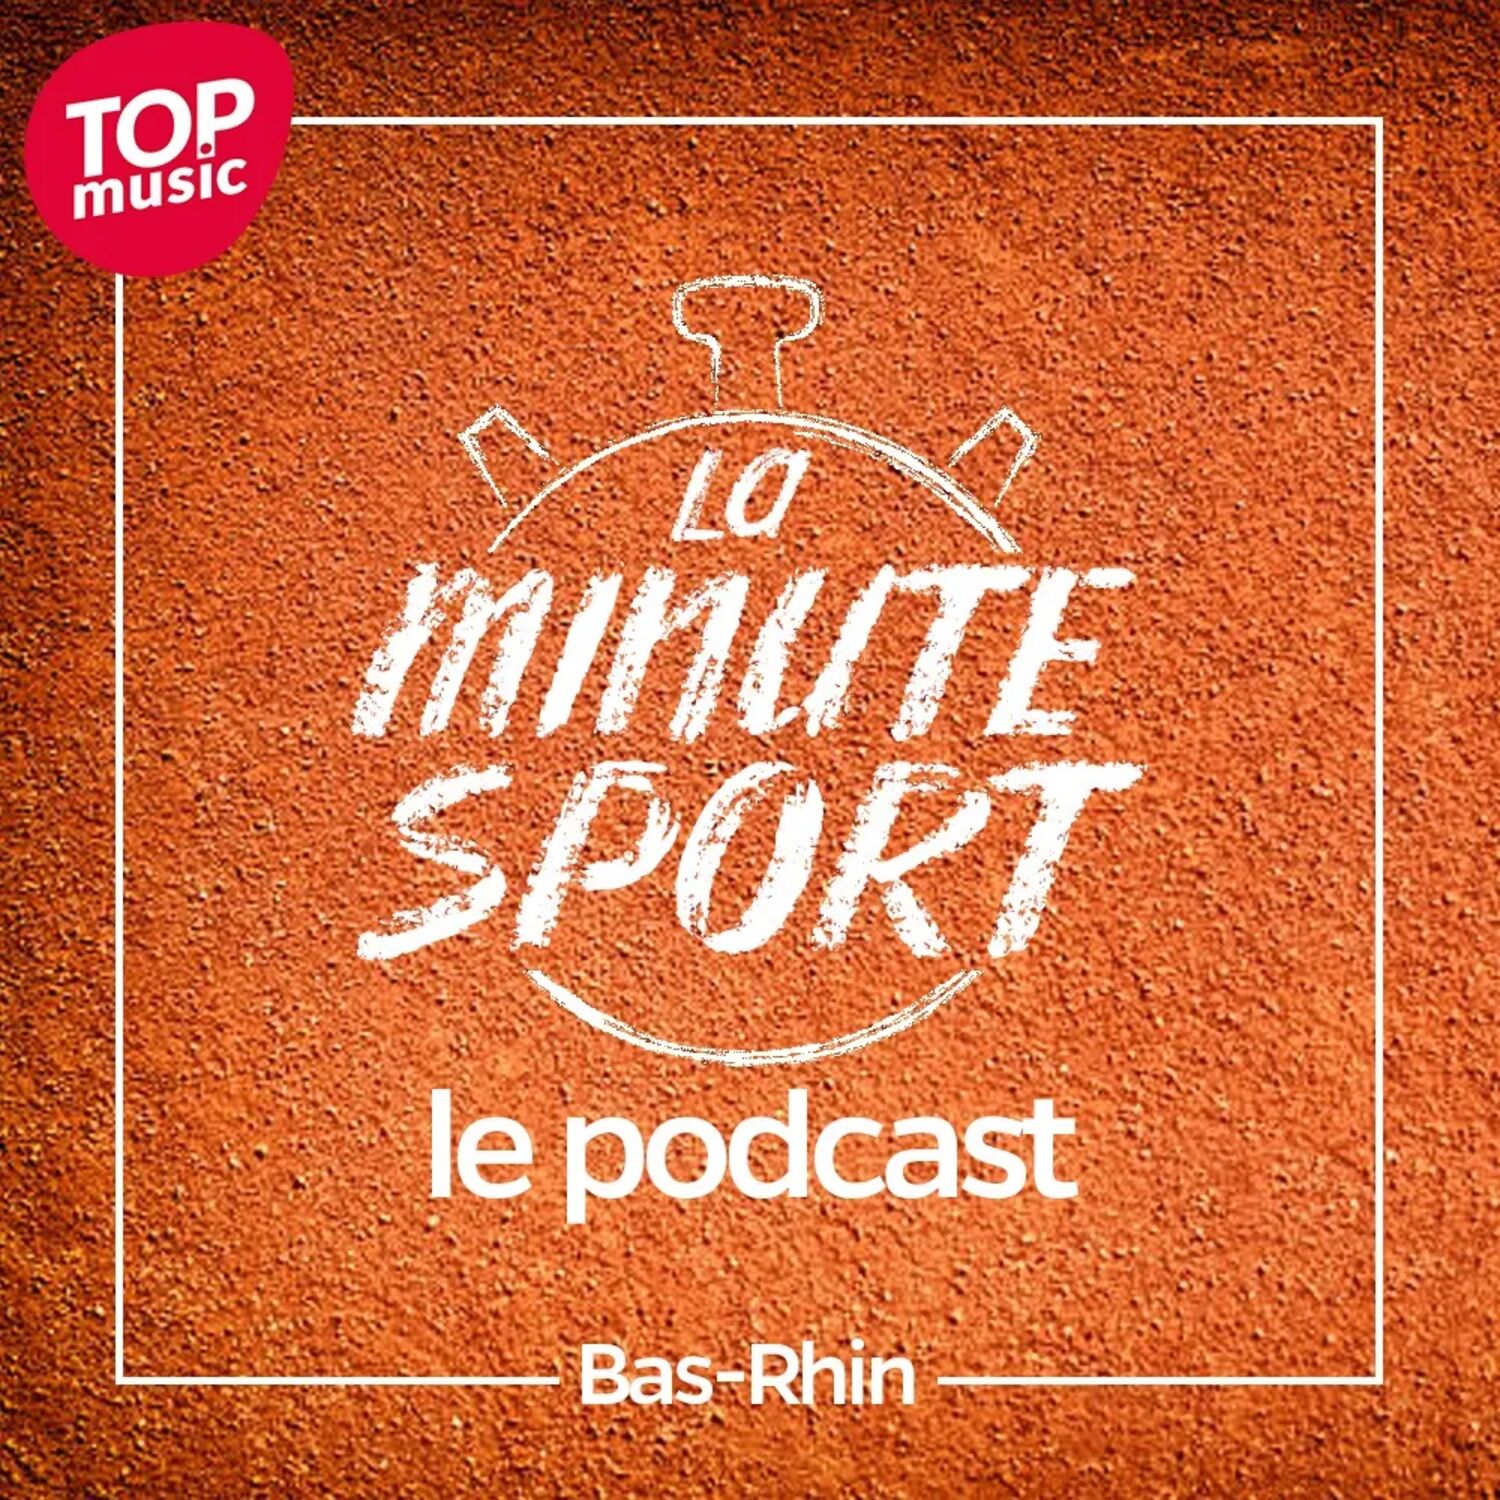 La Minute sport - Bas-Rhin - vendredi 13 janvier